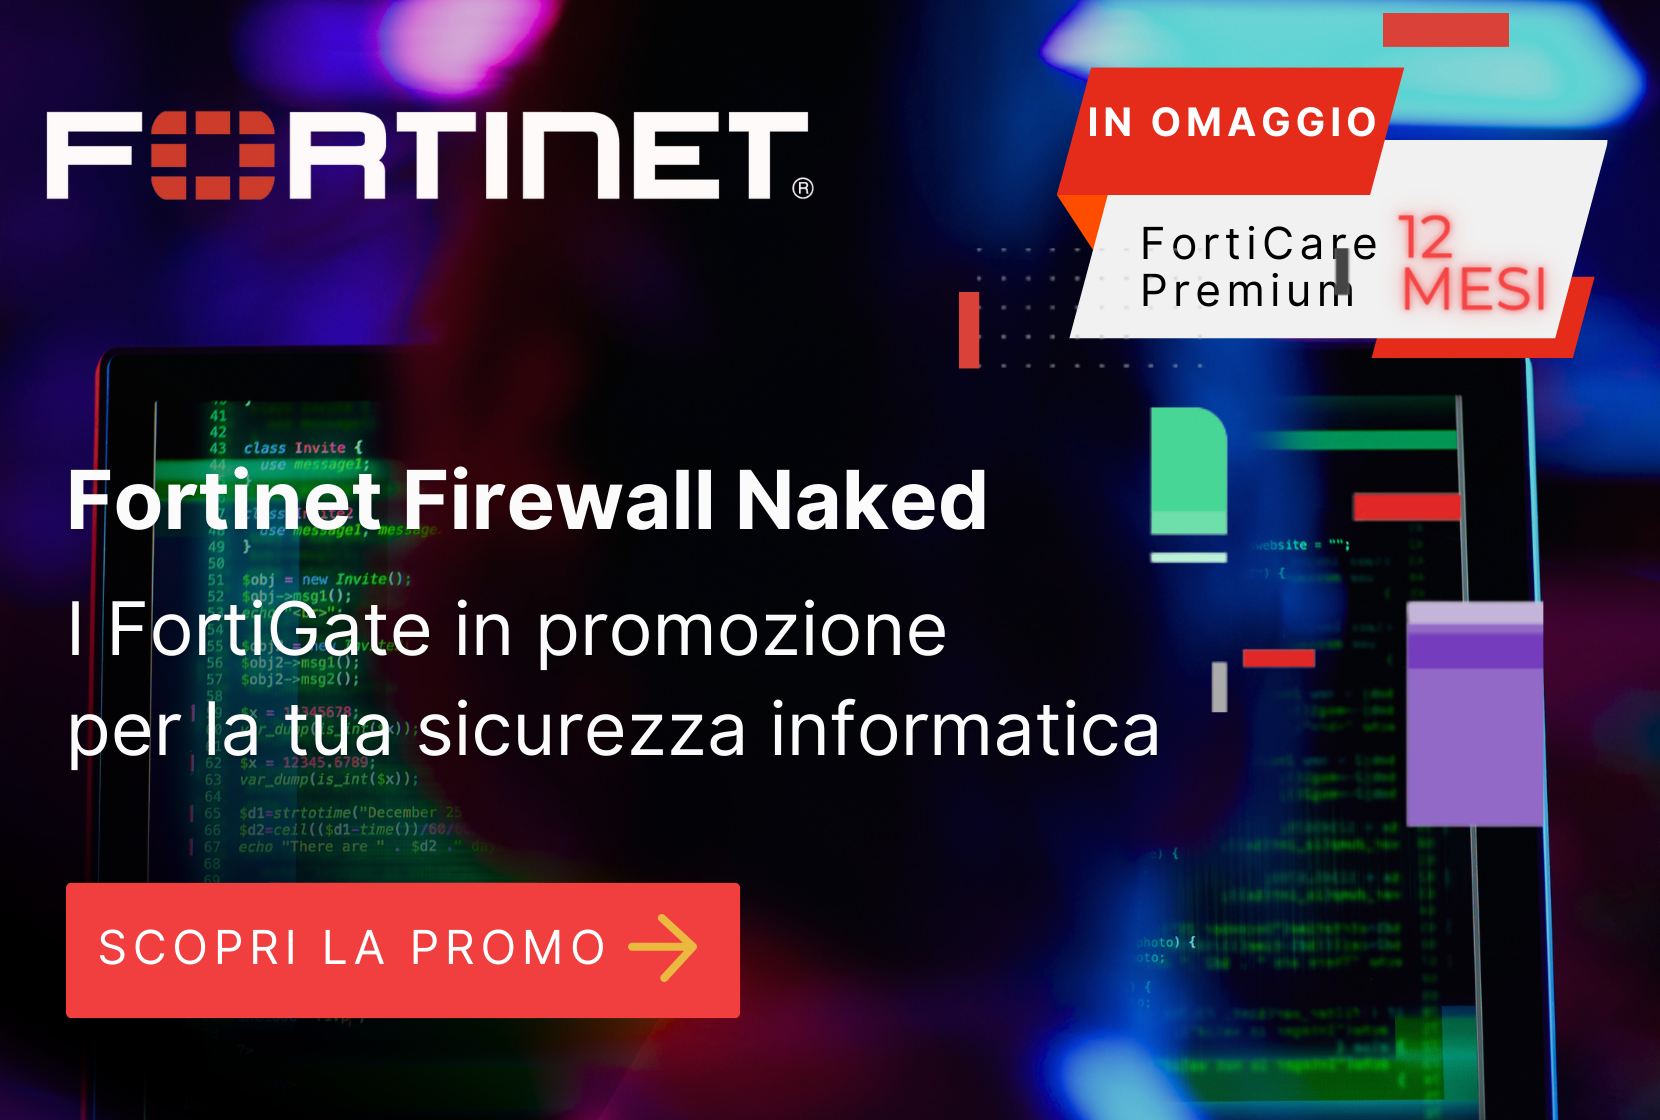 allnet-promo-fortinetfirewall-naked